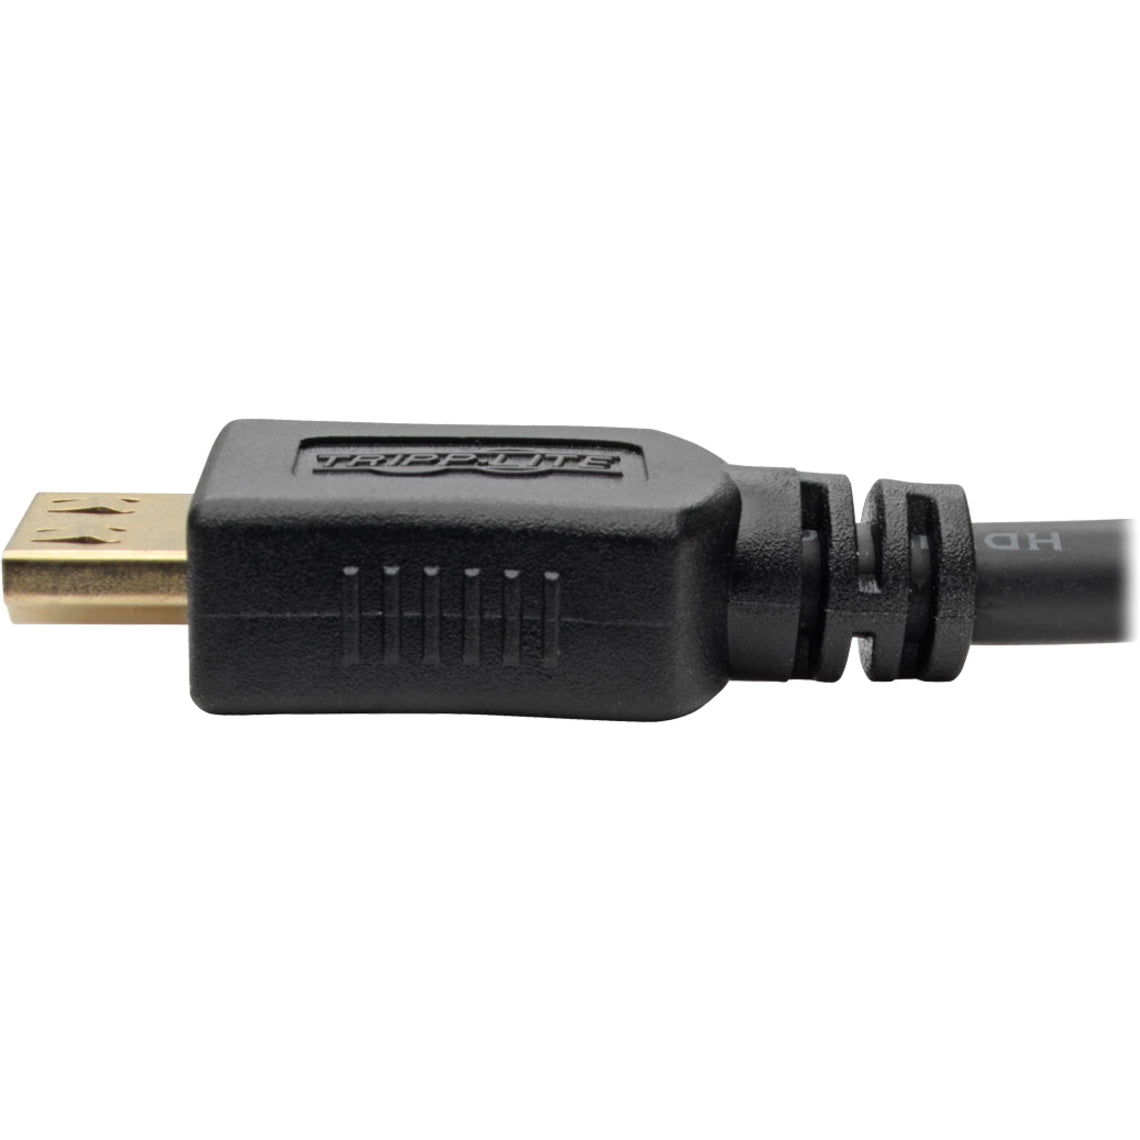 Tripp Lite B123-001 HDMI Active Extender Cable, 1ft, Copper Conductor, TAA Compliant, Taiwan Origin